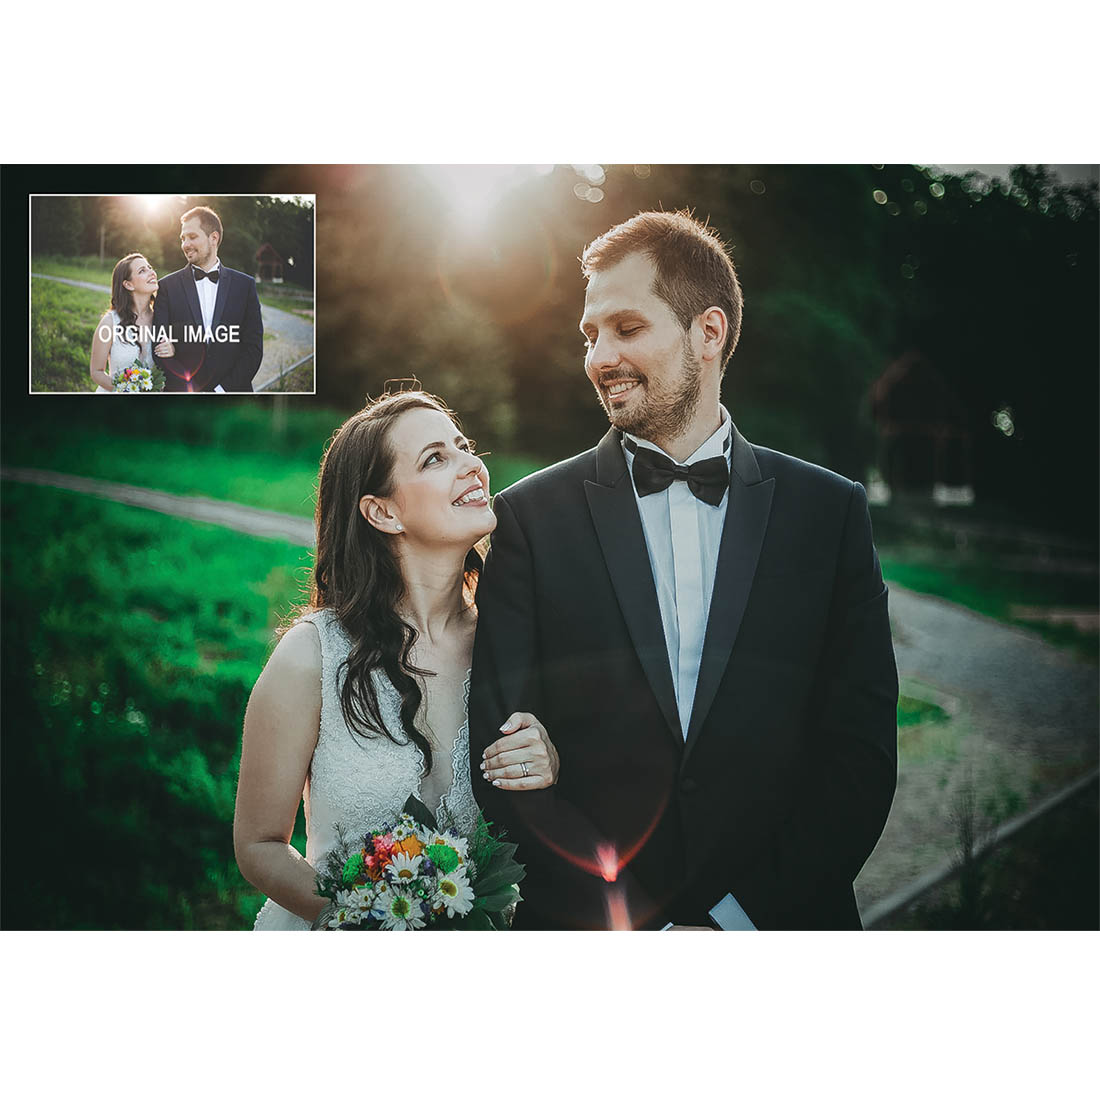 Wedding Photoshop Actions Bundle cover image.